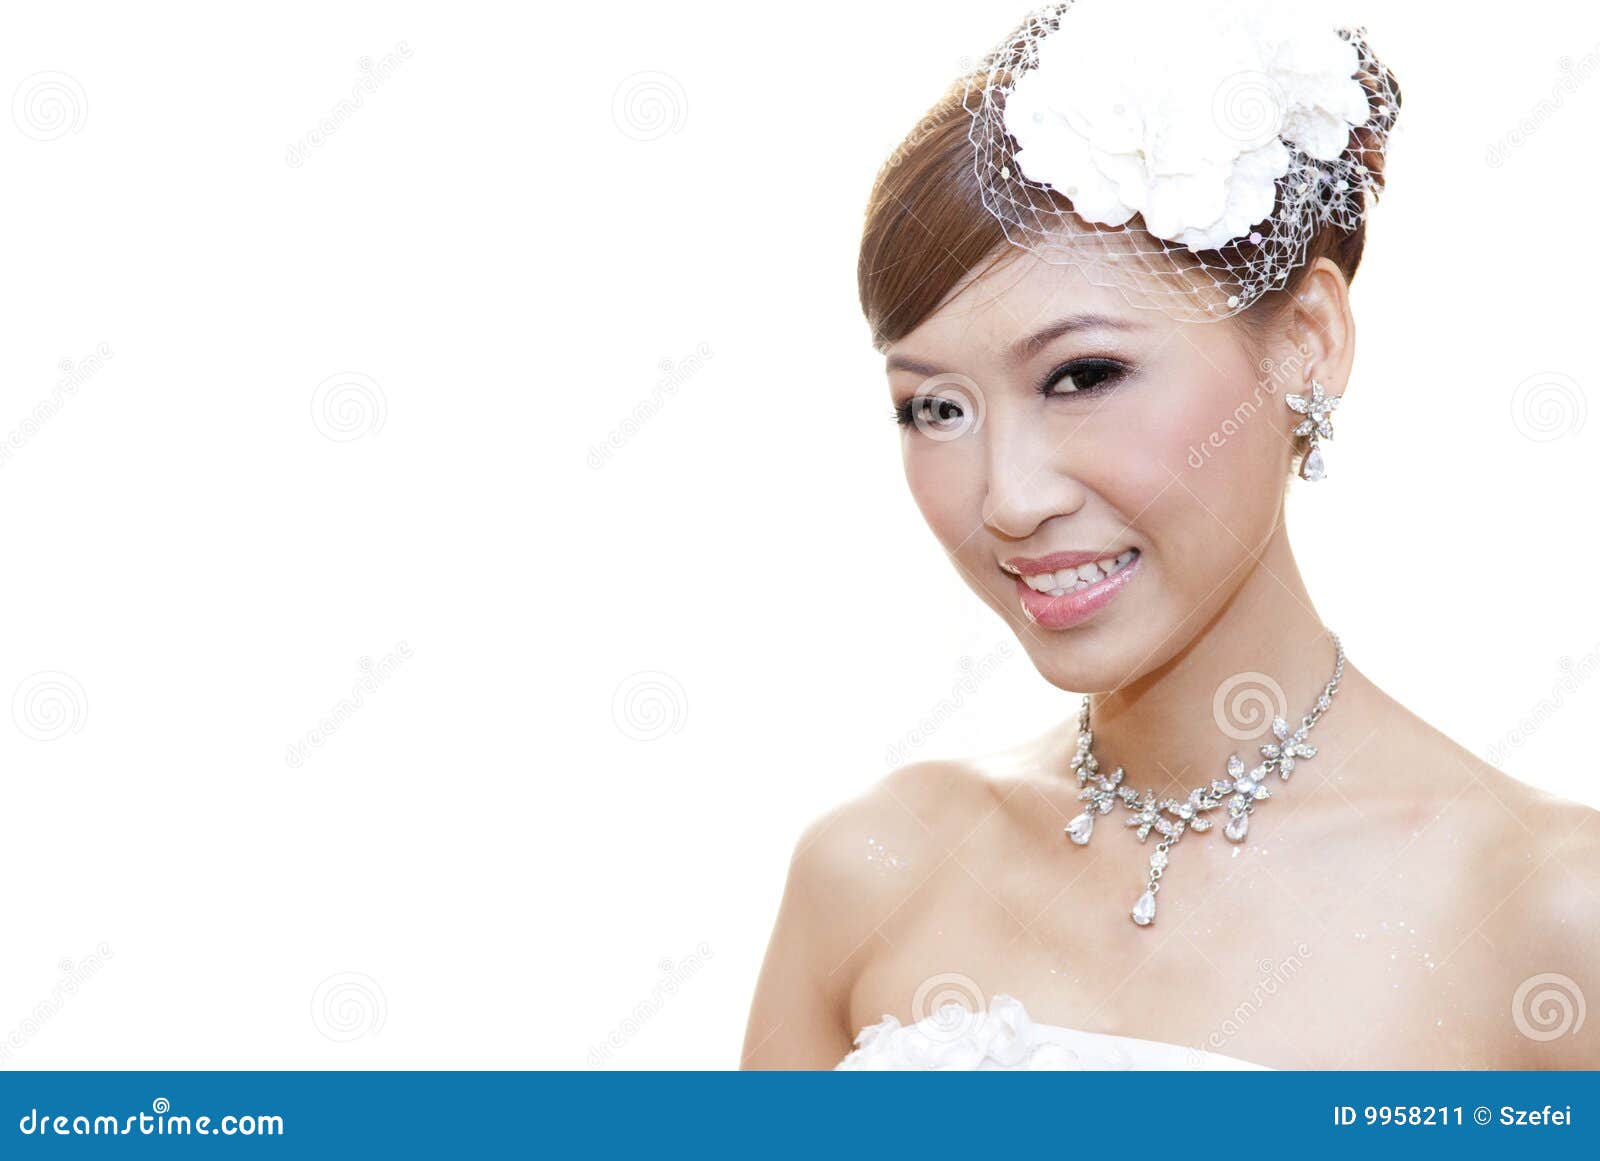 Ultimate Online Asian Brides 37